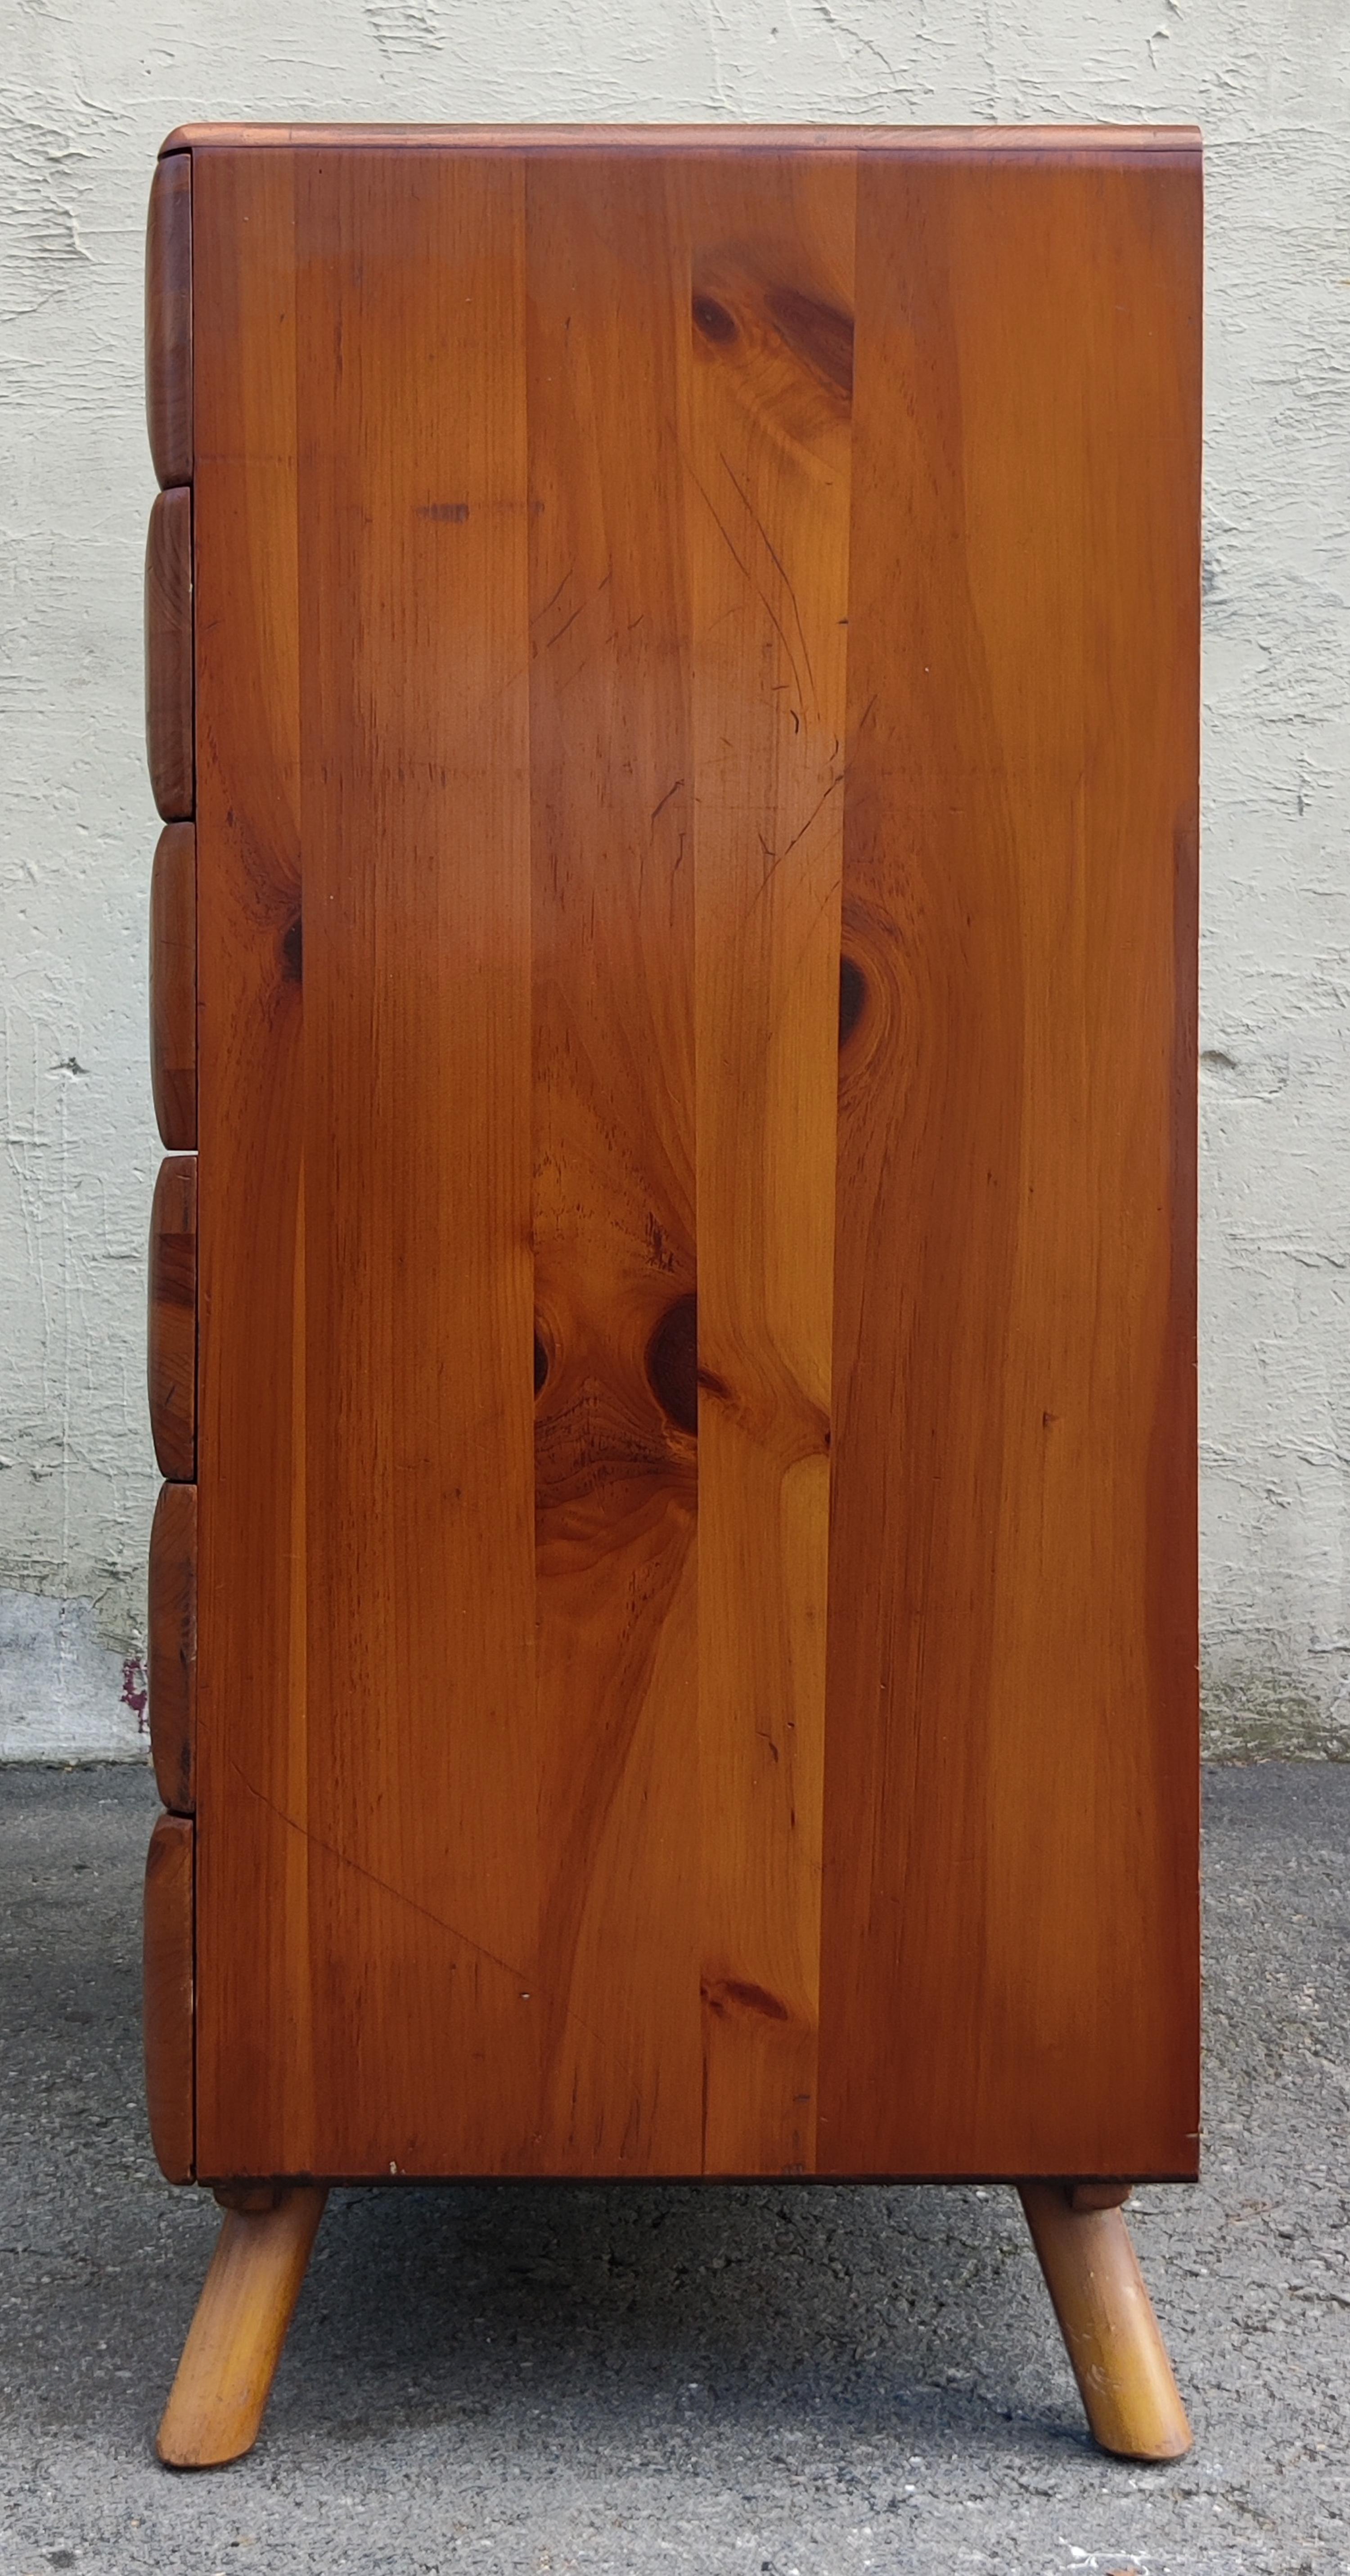 Franklin Shockey Sculptured Pine 6 Drawer Tall Dresser Mid-Century Modern 1970s For Sale 4